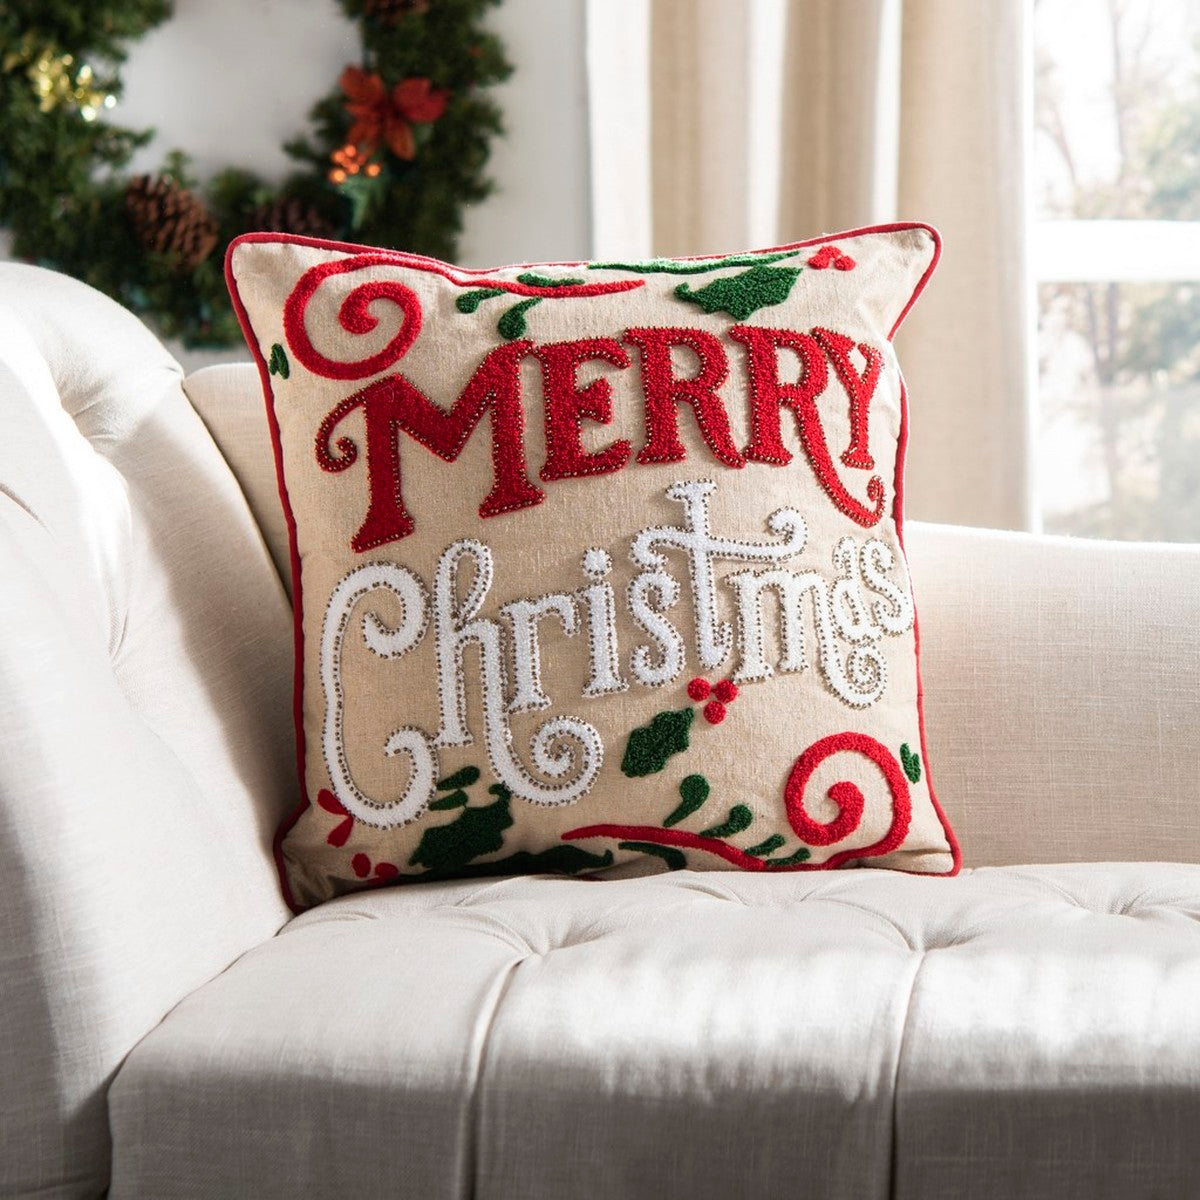 Safavieh "Merry Merry" pillow